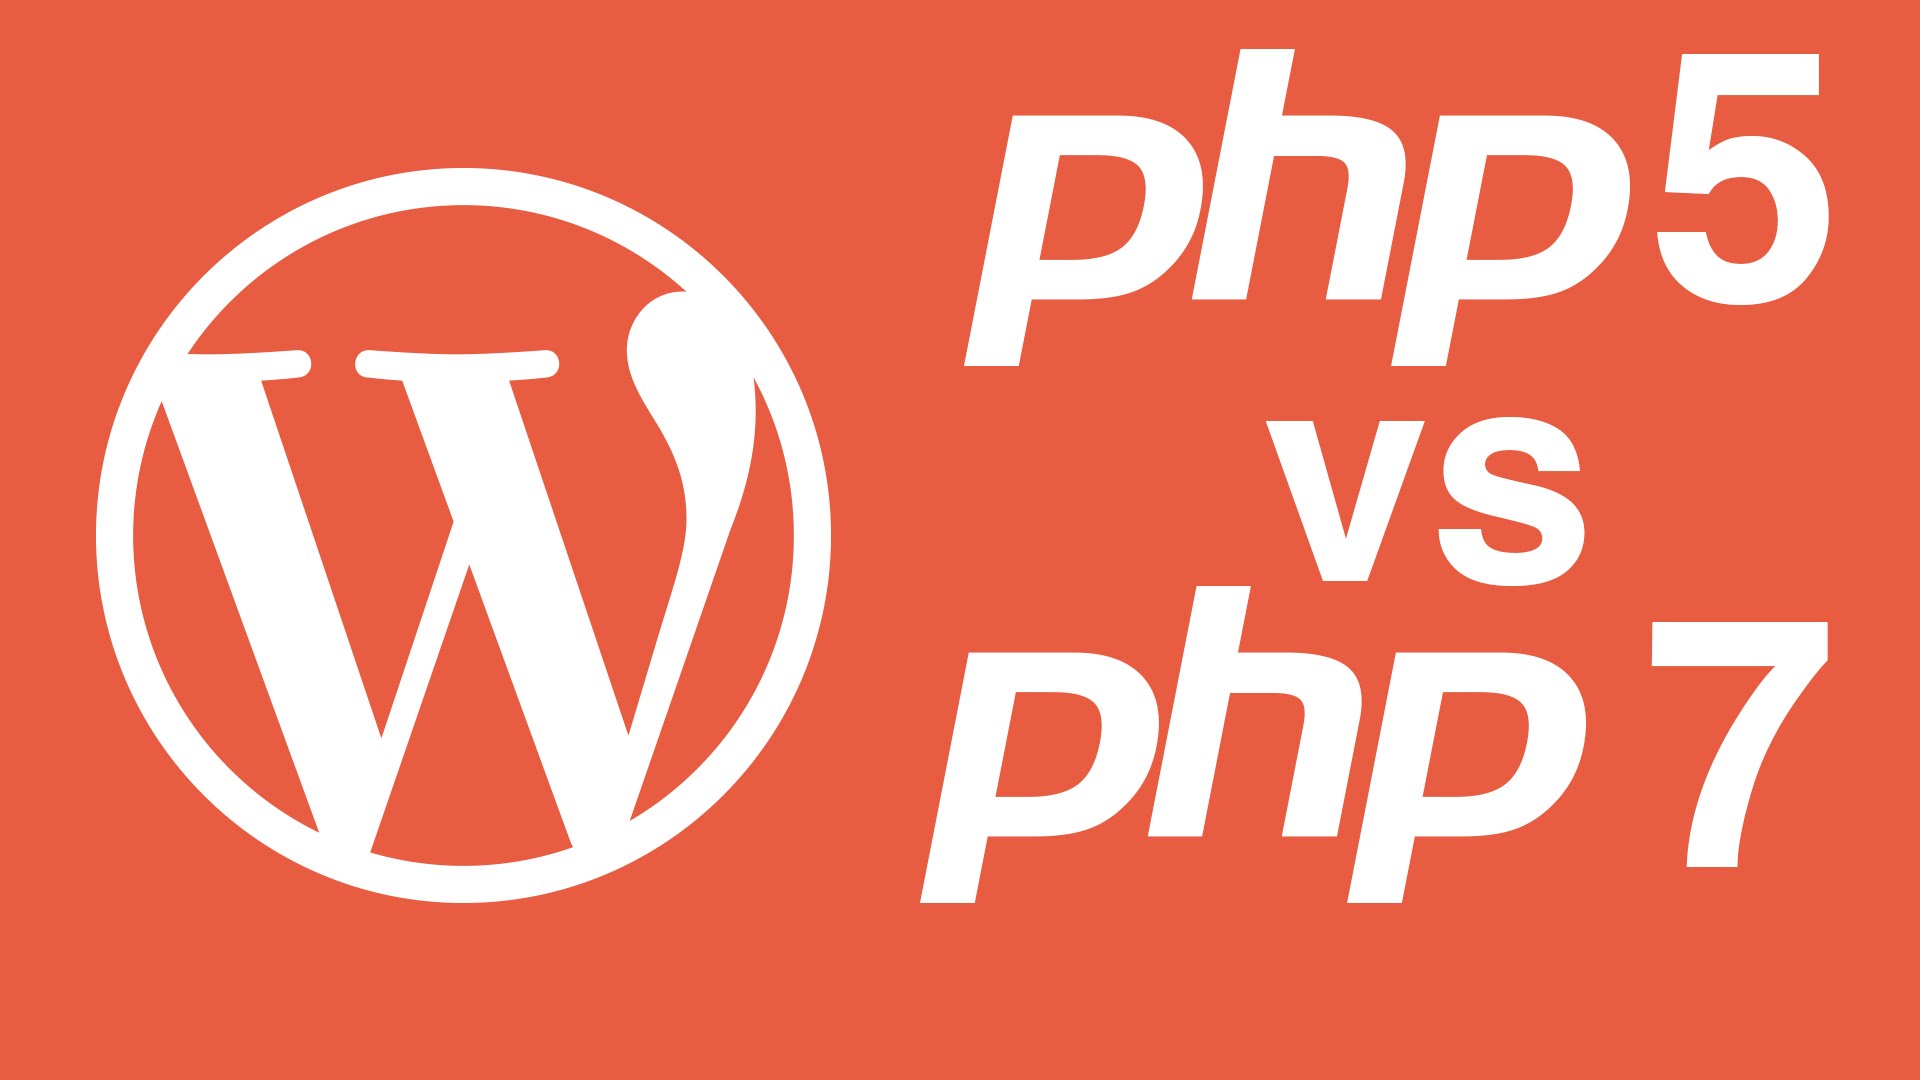 PHP Compatibility Checker Untuk Periksa Kesiapan PHP Versi 7